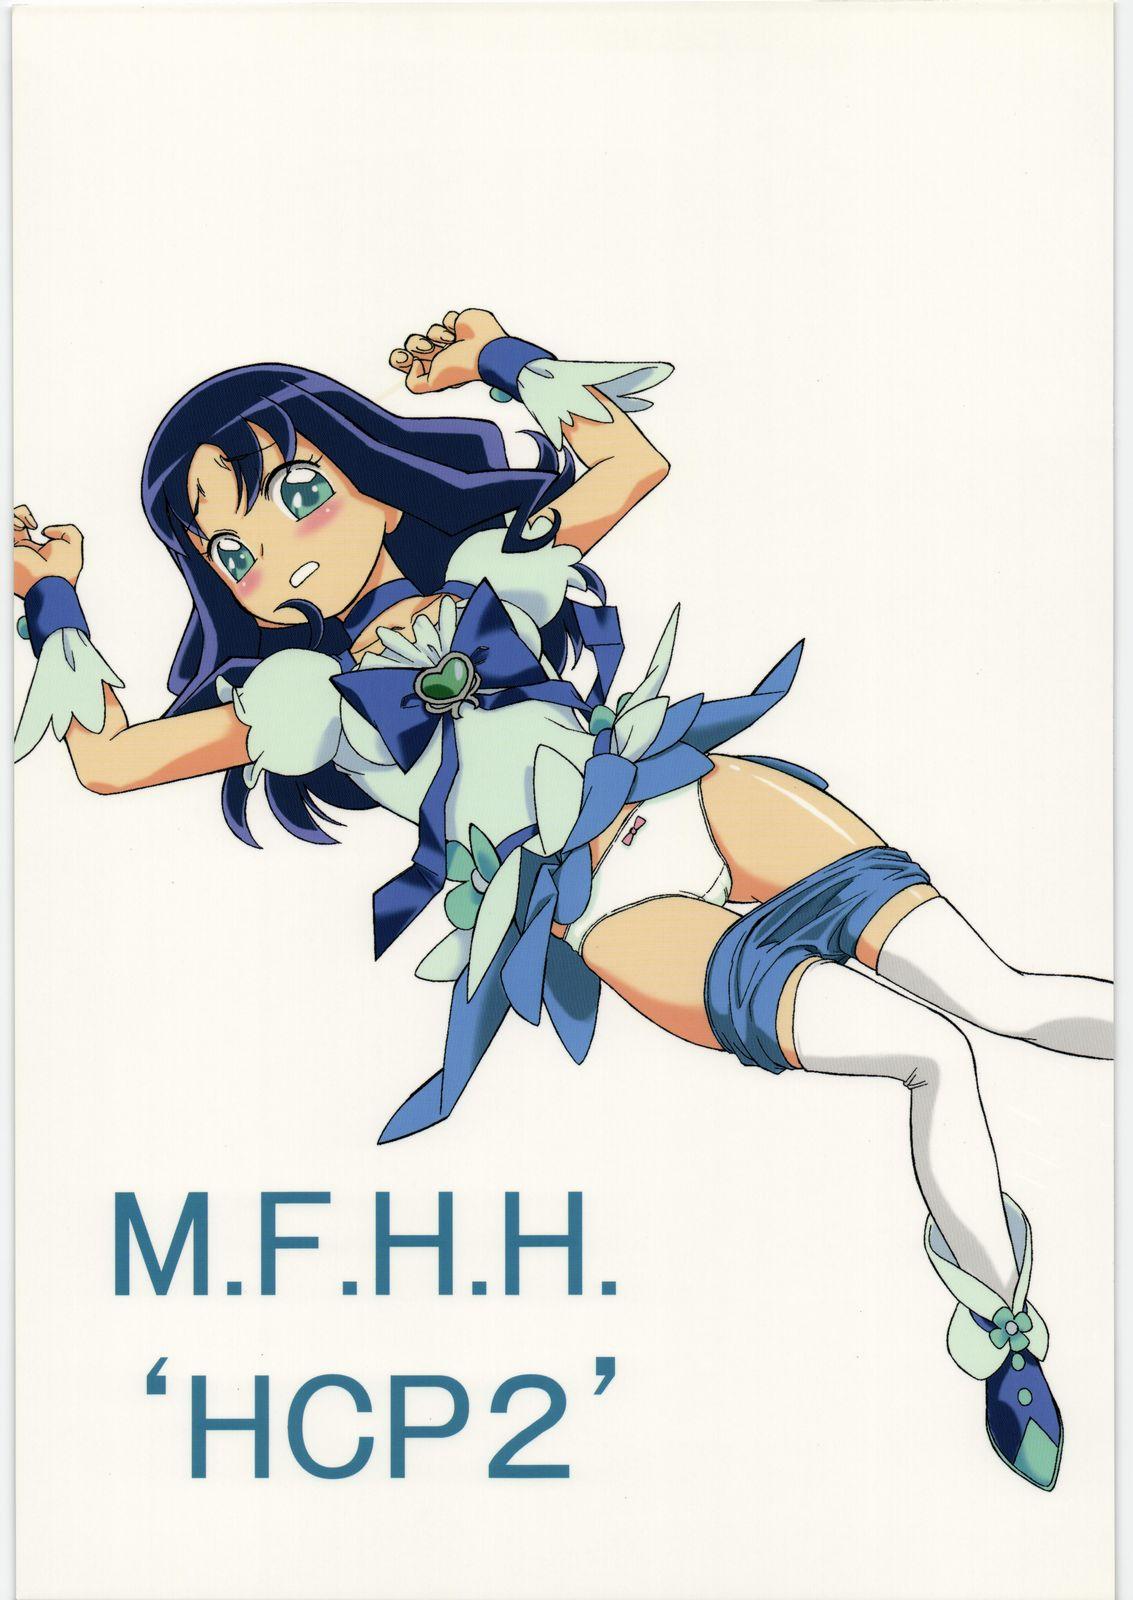 M.F.H.H 'HCP2' 0